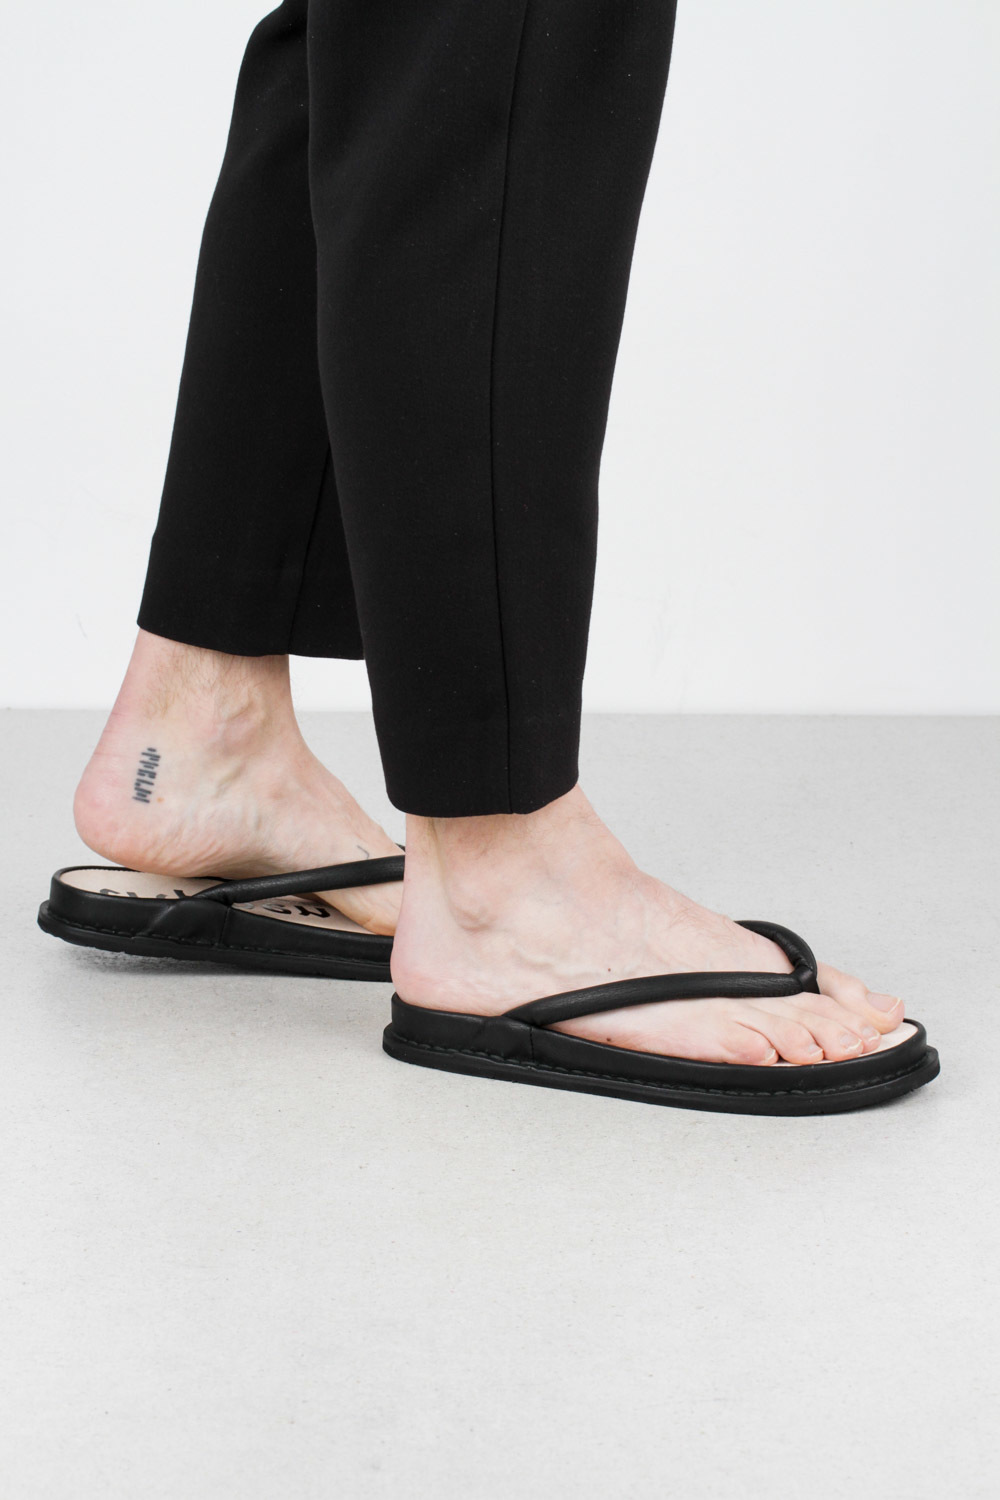 Size M Schoenen damesschoenen Sandalen Open sandalen by ASICS Trading.Co Japanese zori 